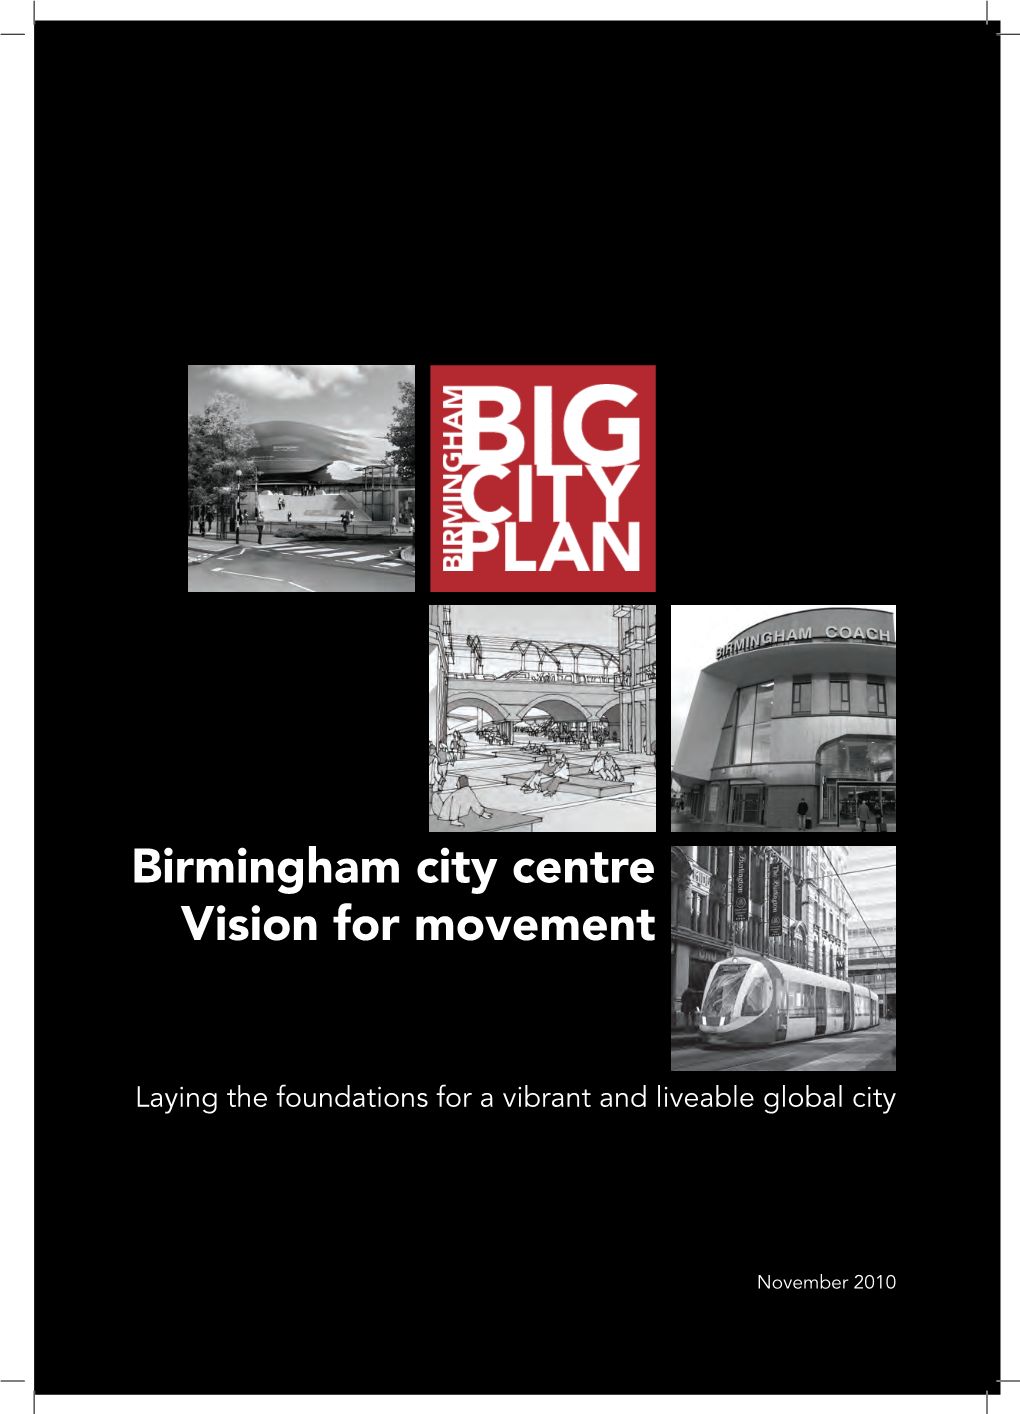 Birmingham City Centre Vision for Movement